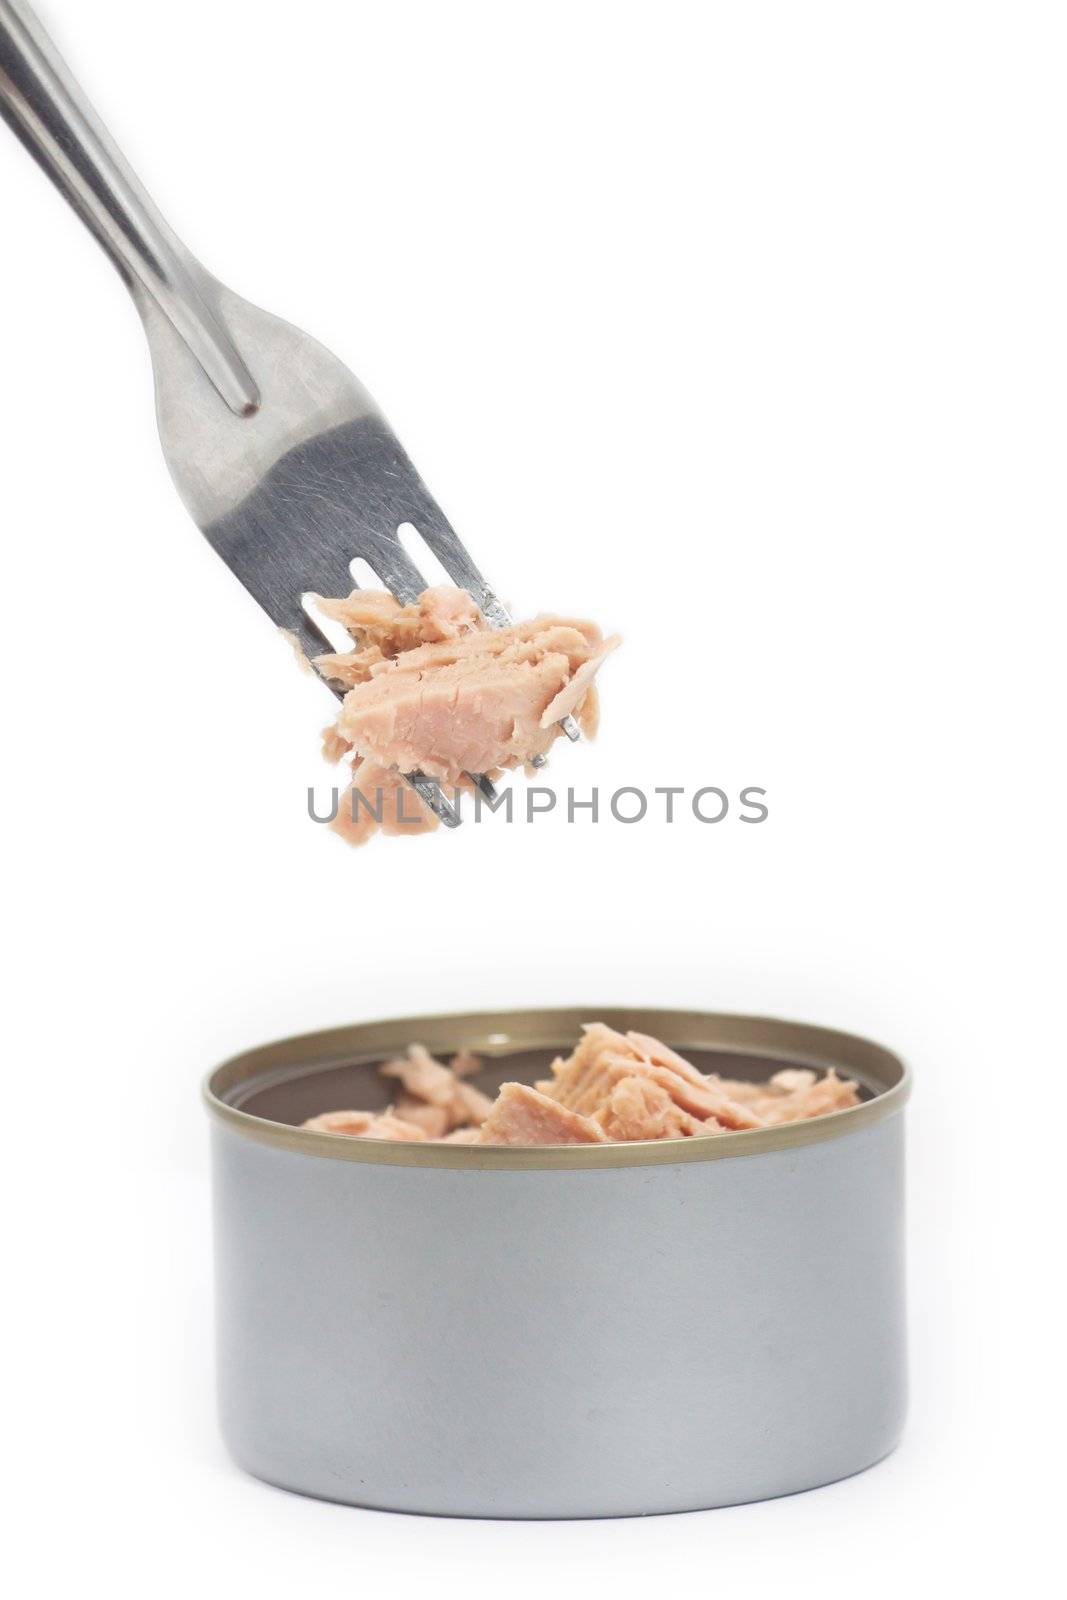 Tuna and fork by artemisphoto